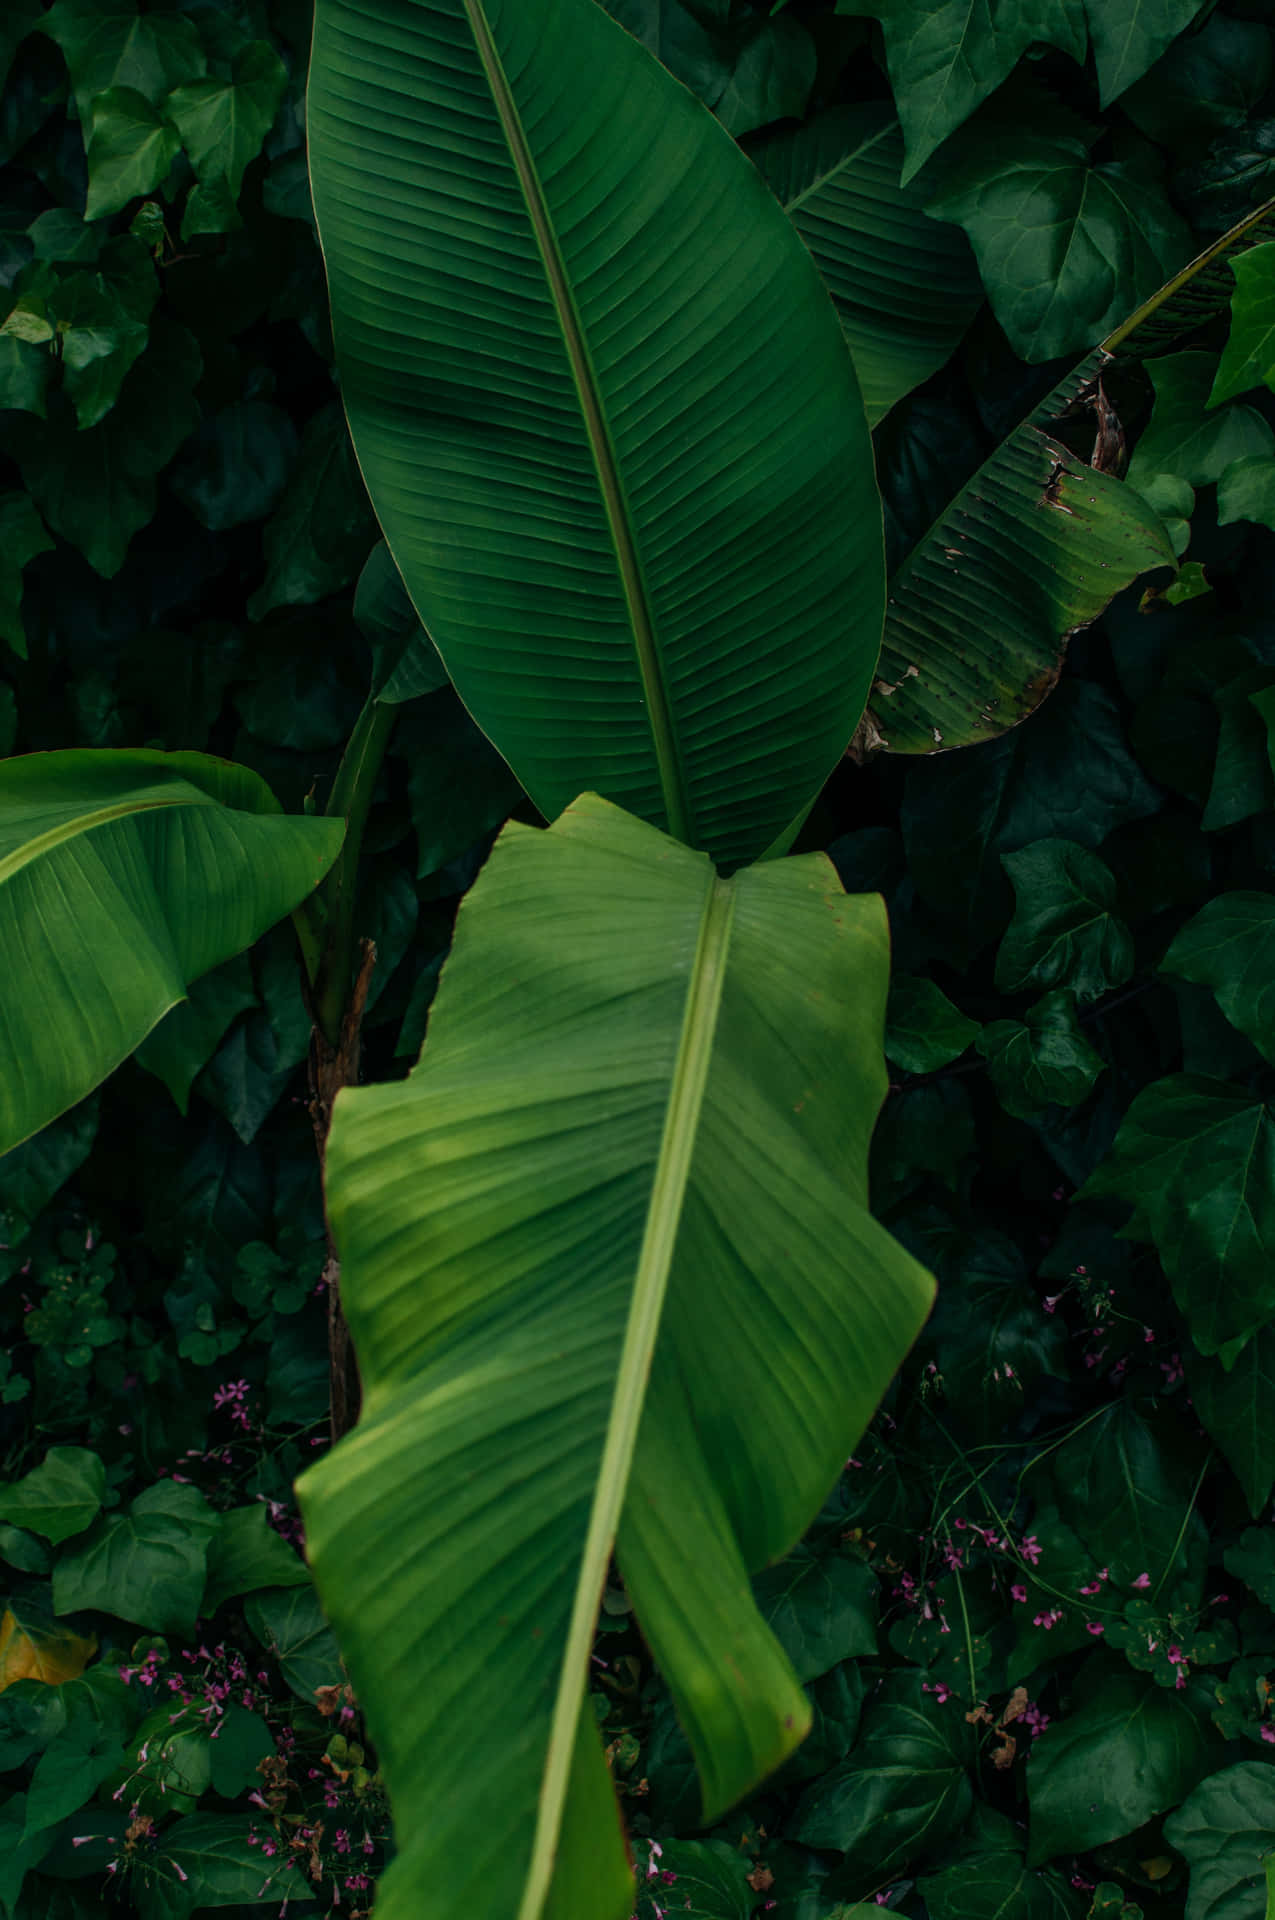 A lush and vibrant banana leaf background